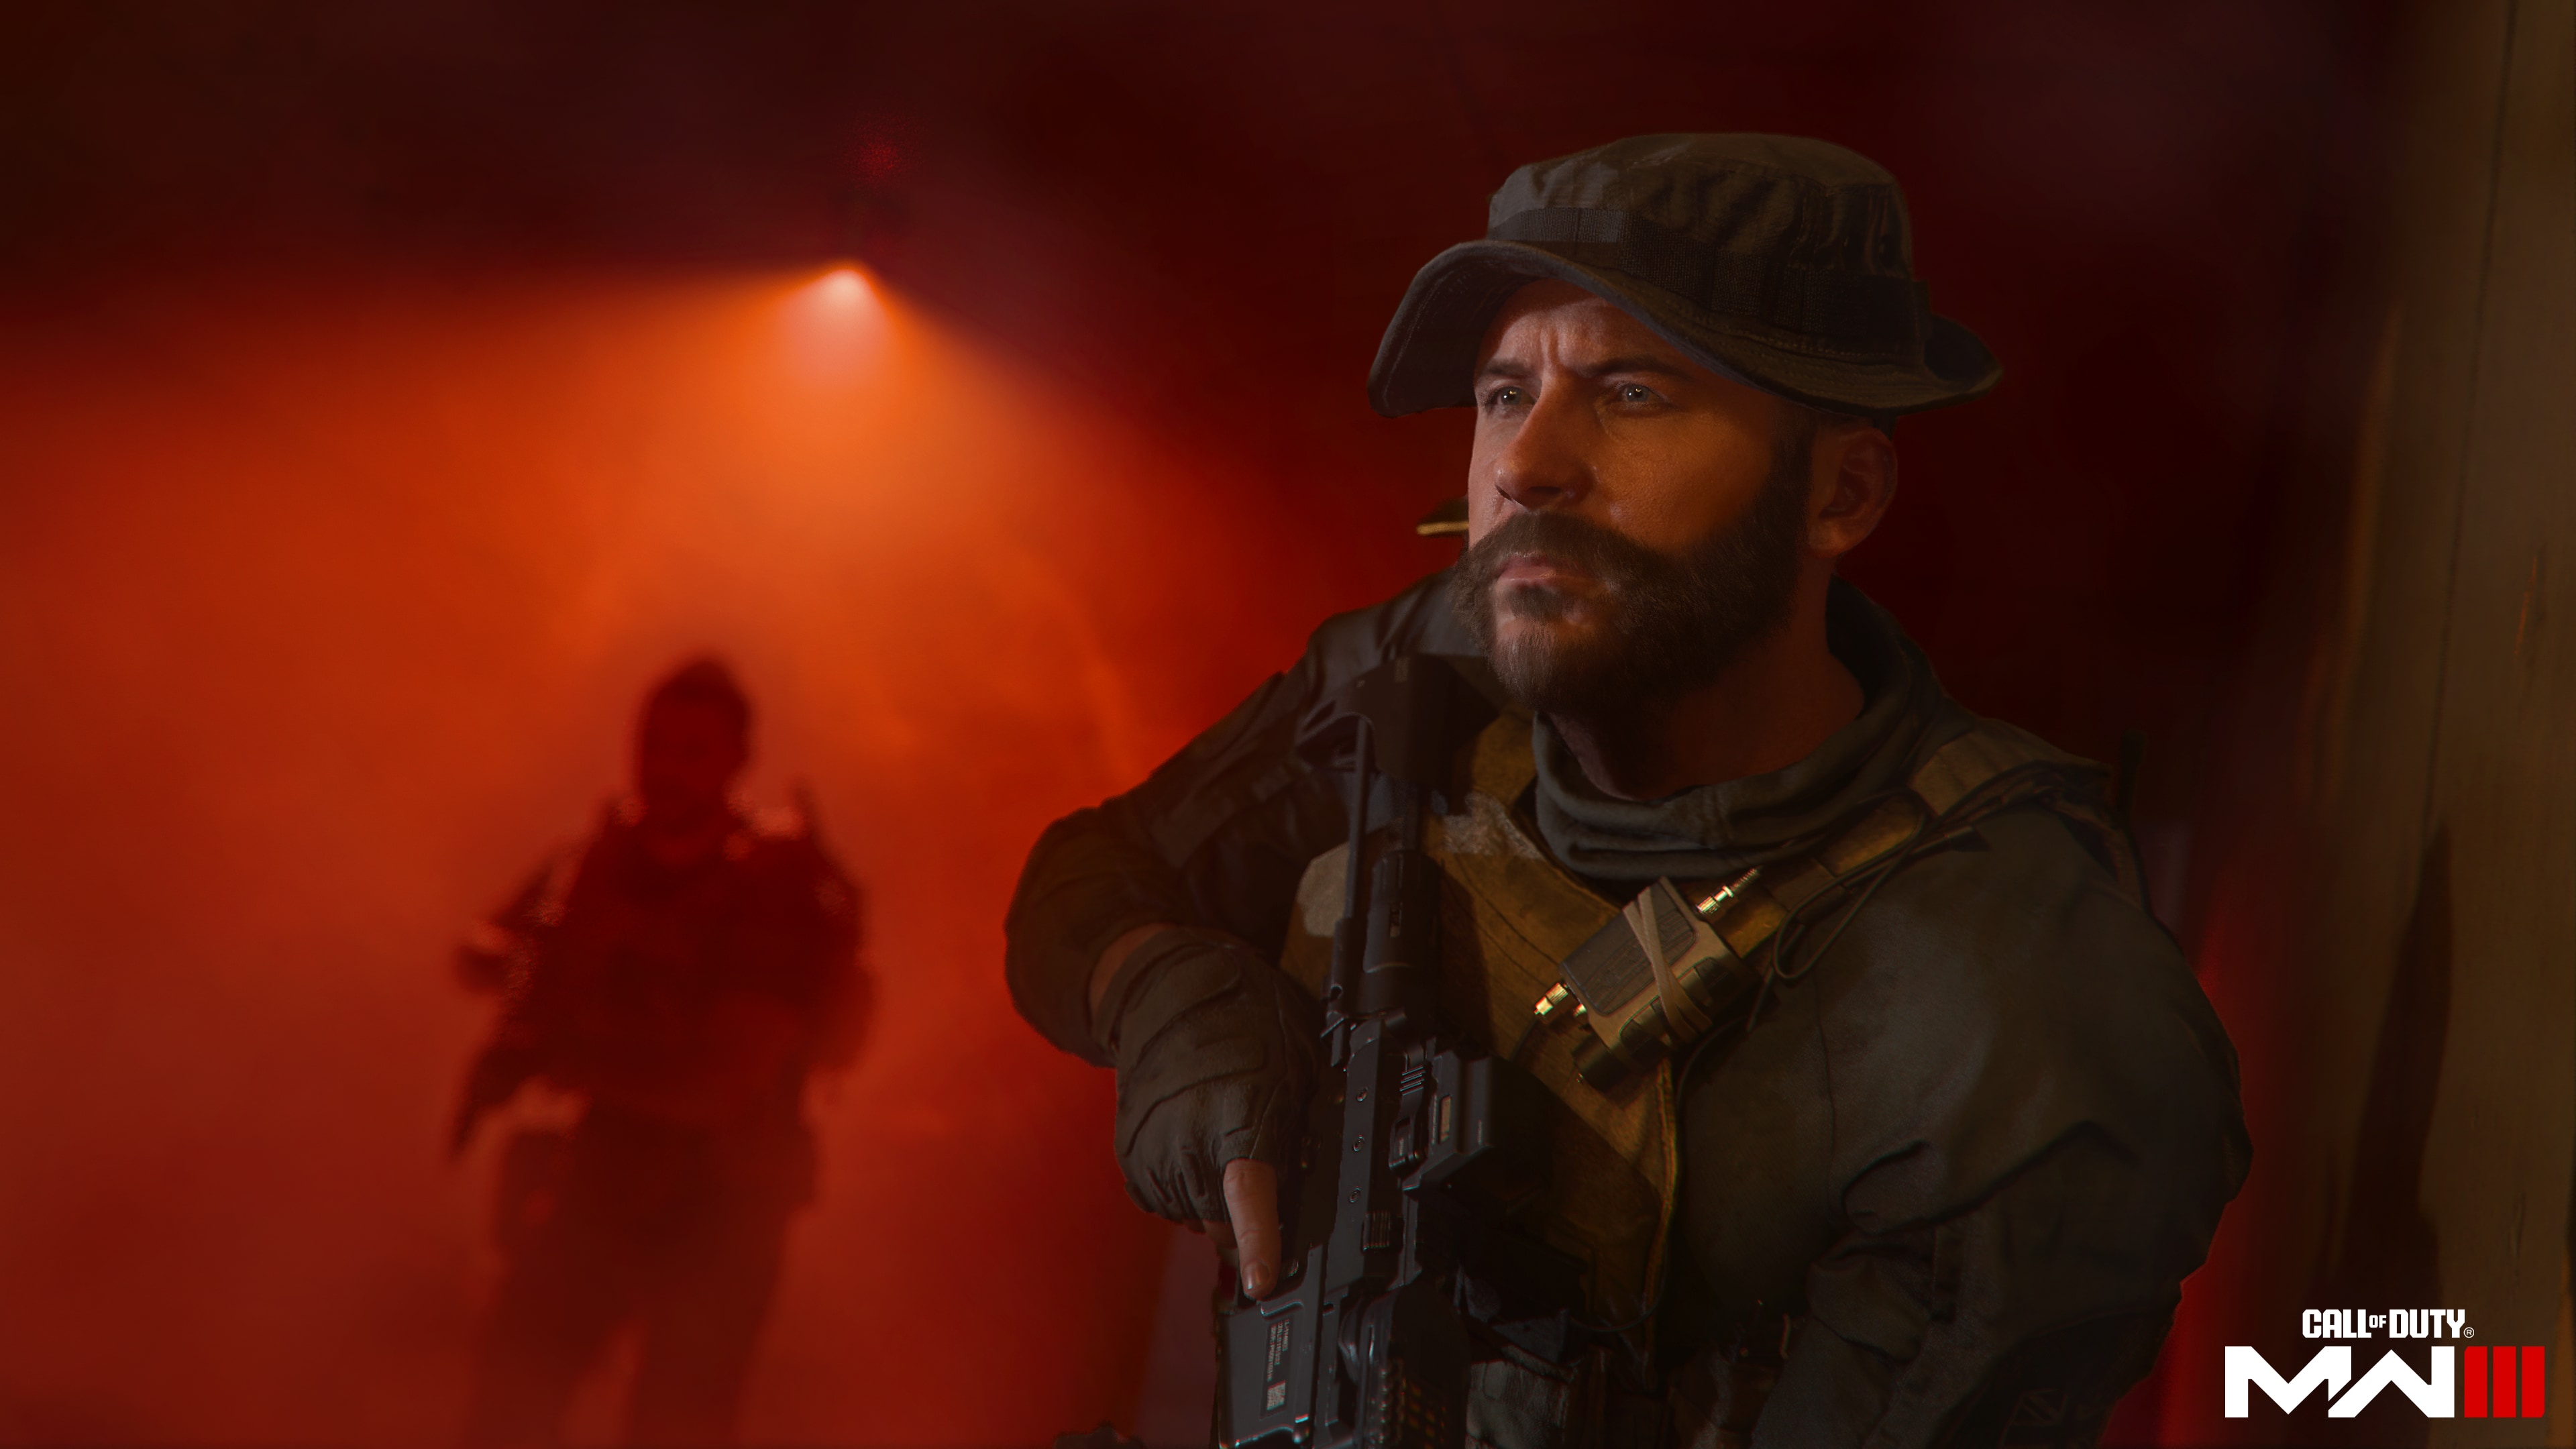 Call of Duty Modern Warfare III - Captain Price